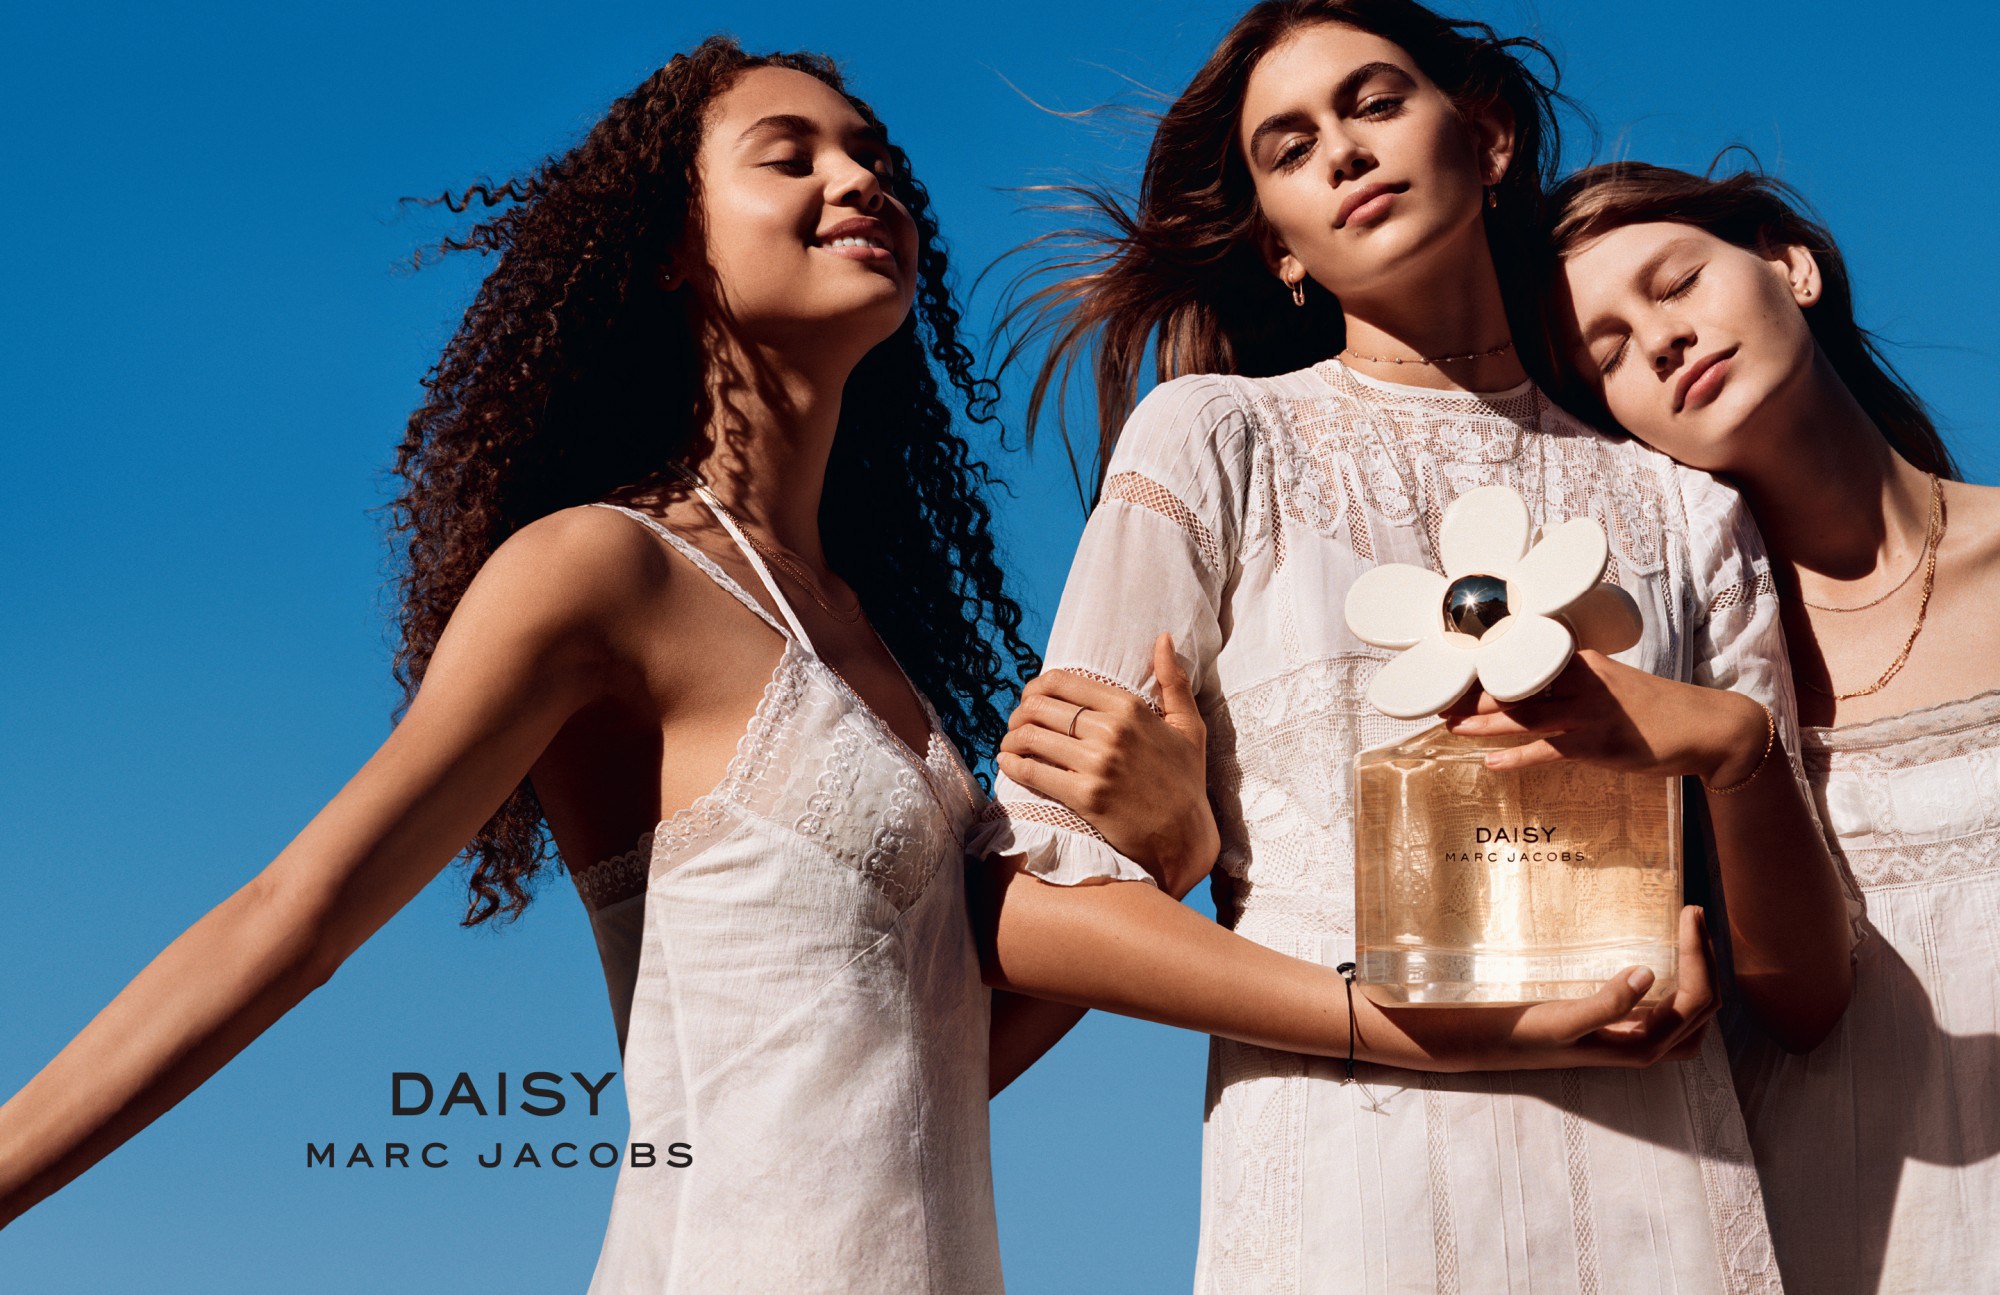 marc-jacobs-daisy-fragrance-ad-campaign-blogozine_2.jpg